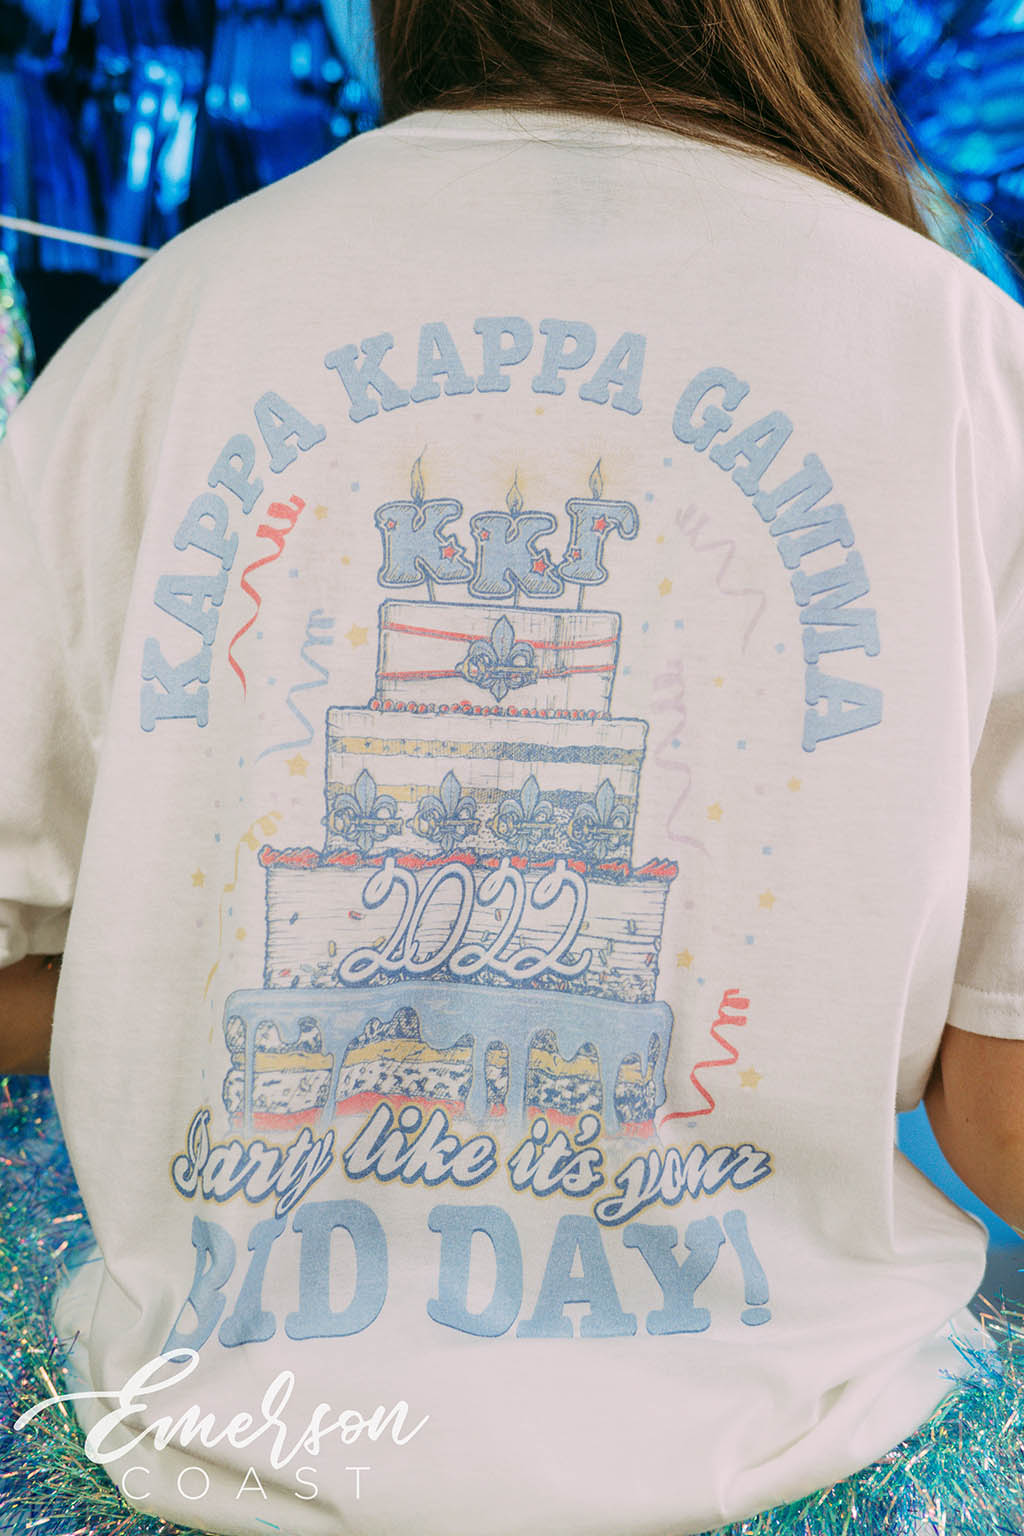 Kappa Kappa Gamma Bid Day Birthday Party Tee